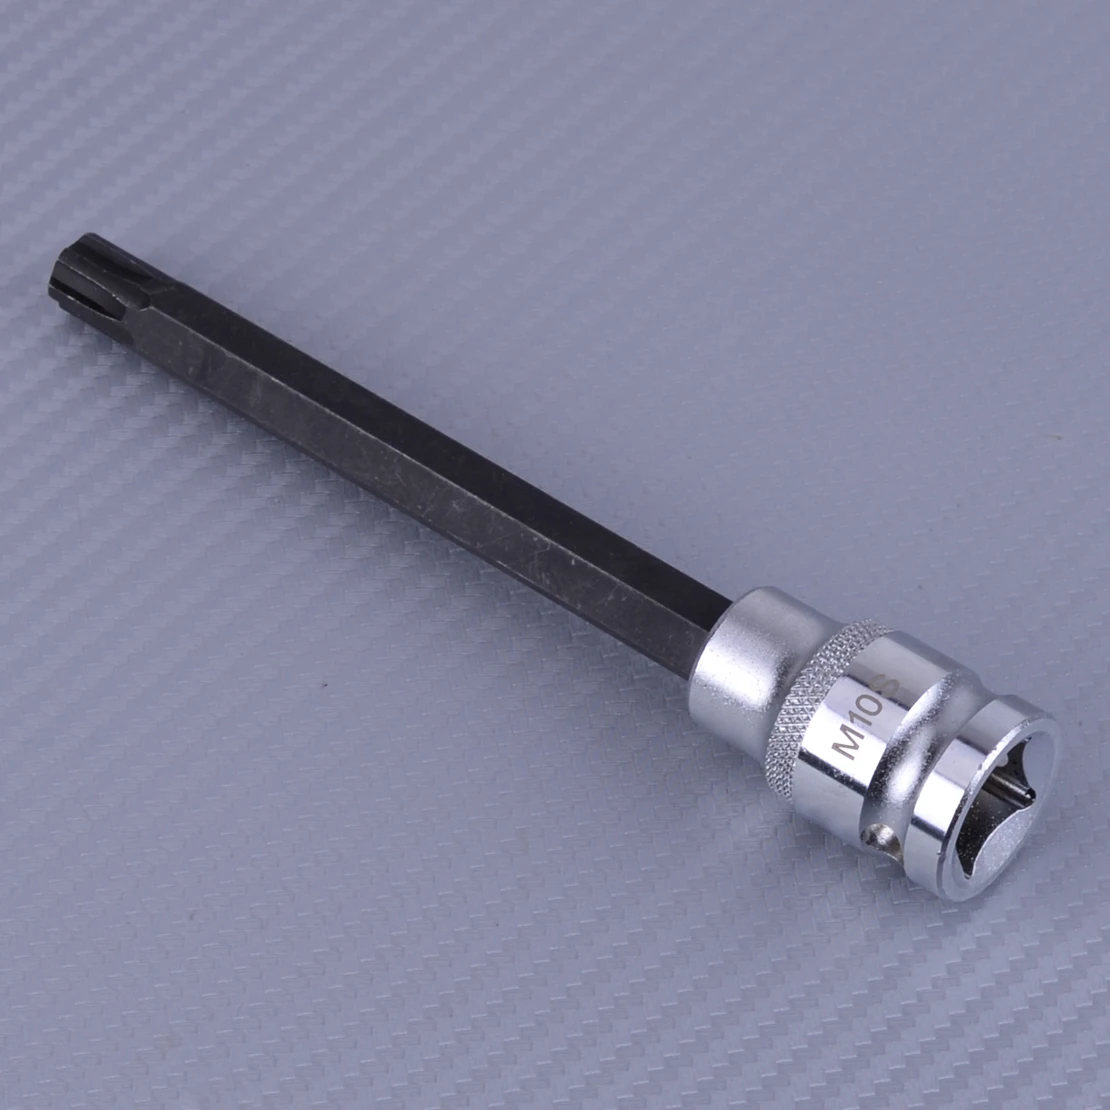 beler 140mm 1/2" Drive M10 Cylinder Head Bolt Remover Tool T52 Polydrive Screwdriver Socket for VW Audi T10070